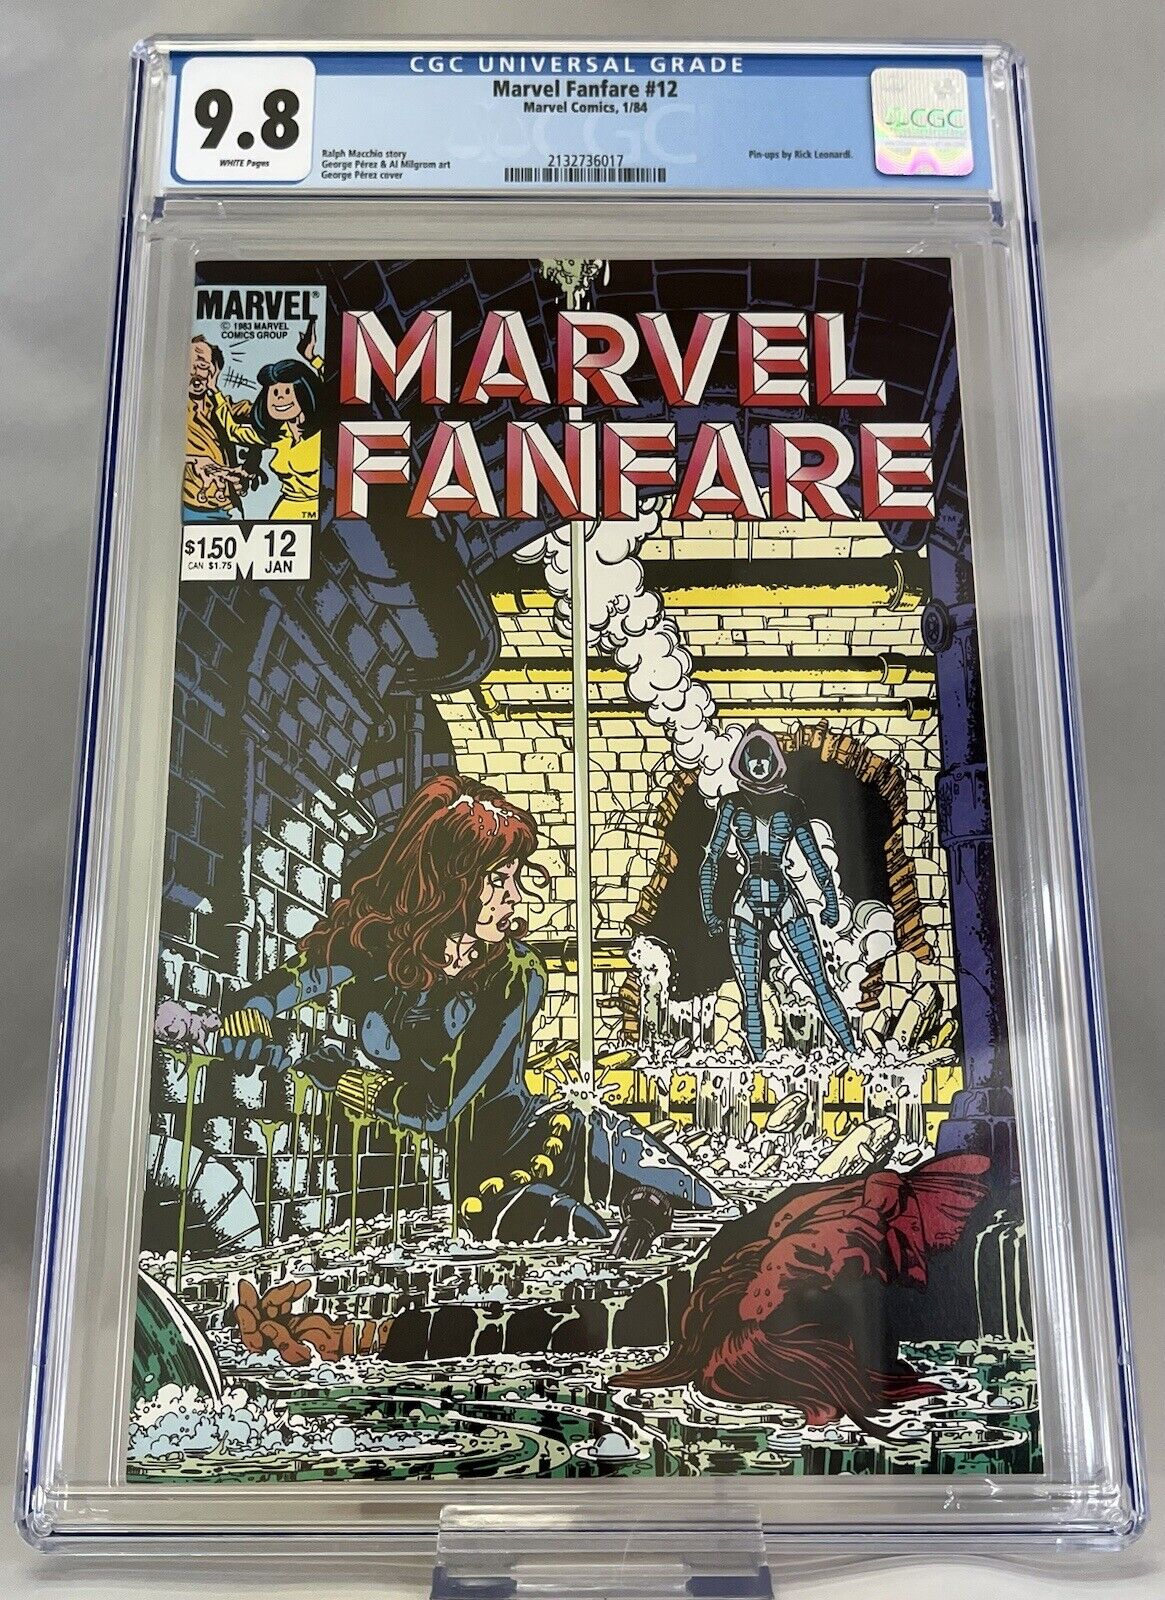 Marvel Fanfare #12 Marvel Comics, 1/84 Pin-ups by Rick Leonardi, Graded CGC 9.8